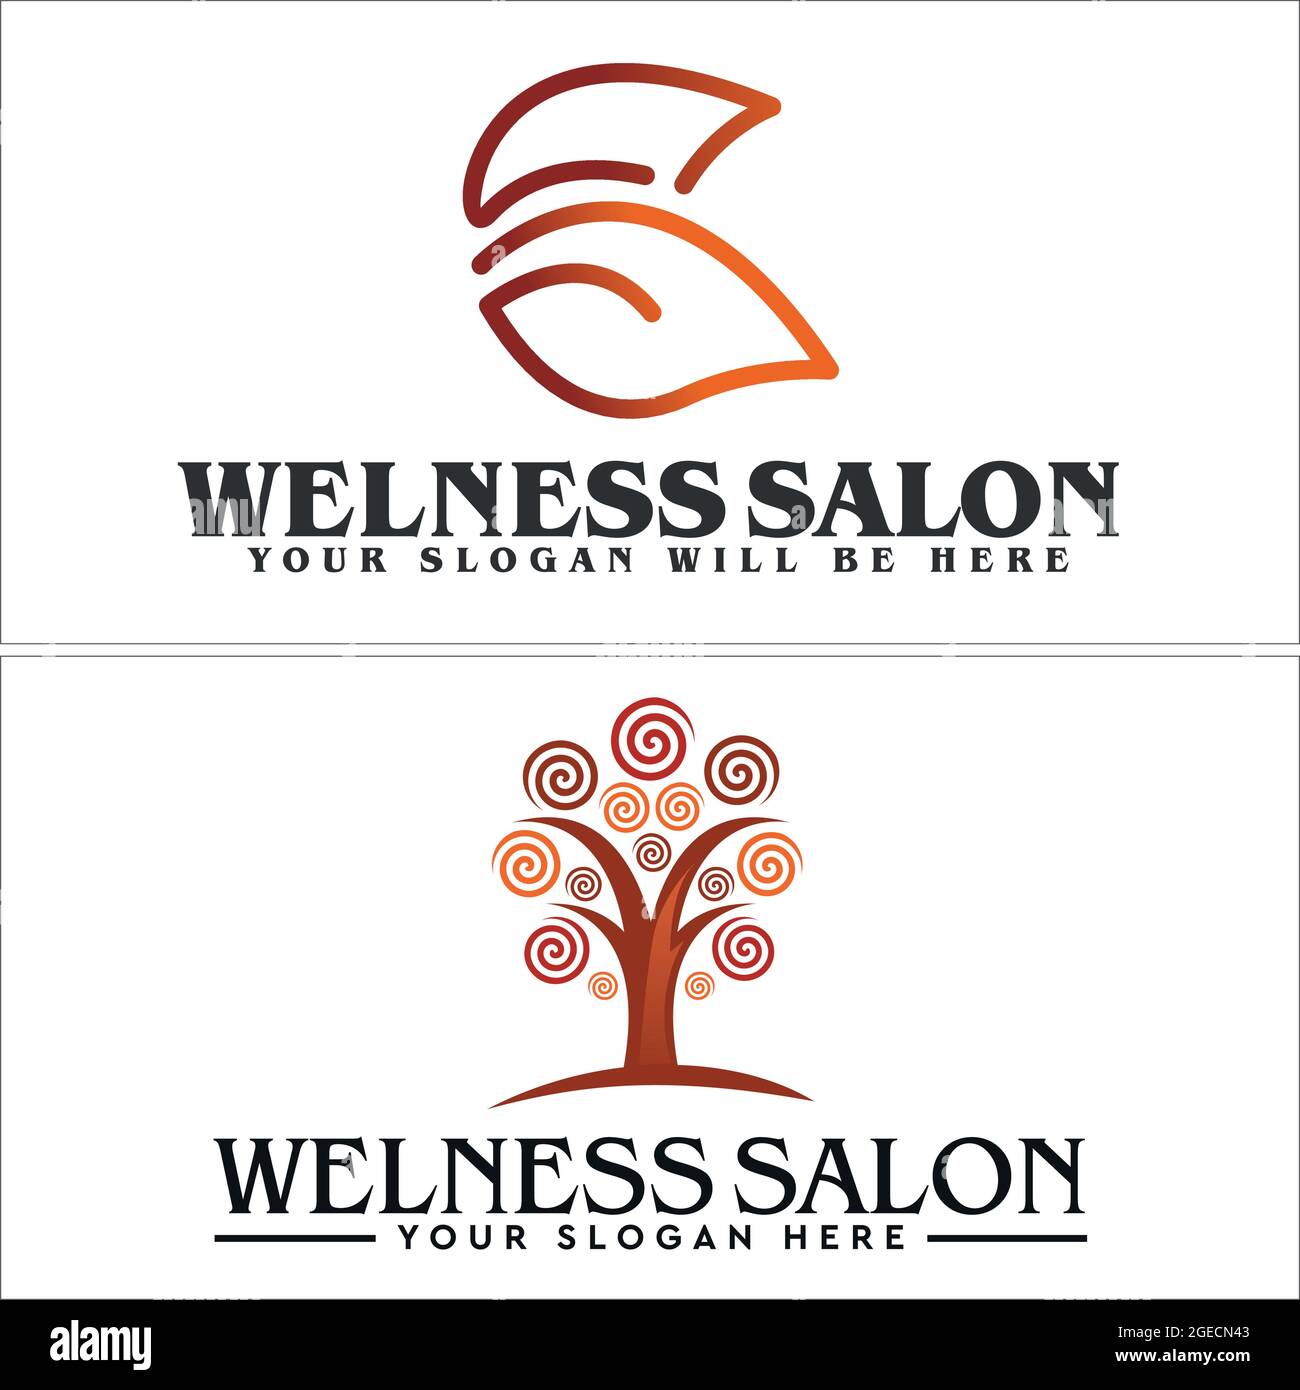 Tree leaf plant icon symbol initial luxury salon wellness logo design Stock Vector